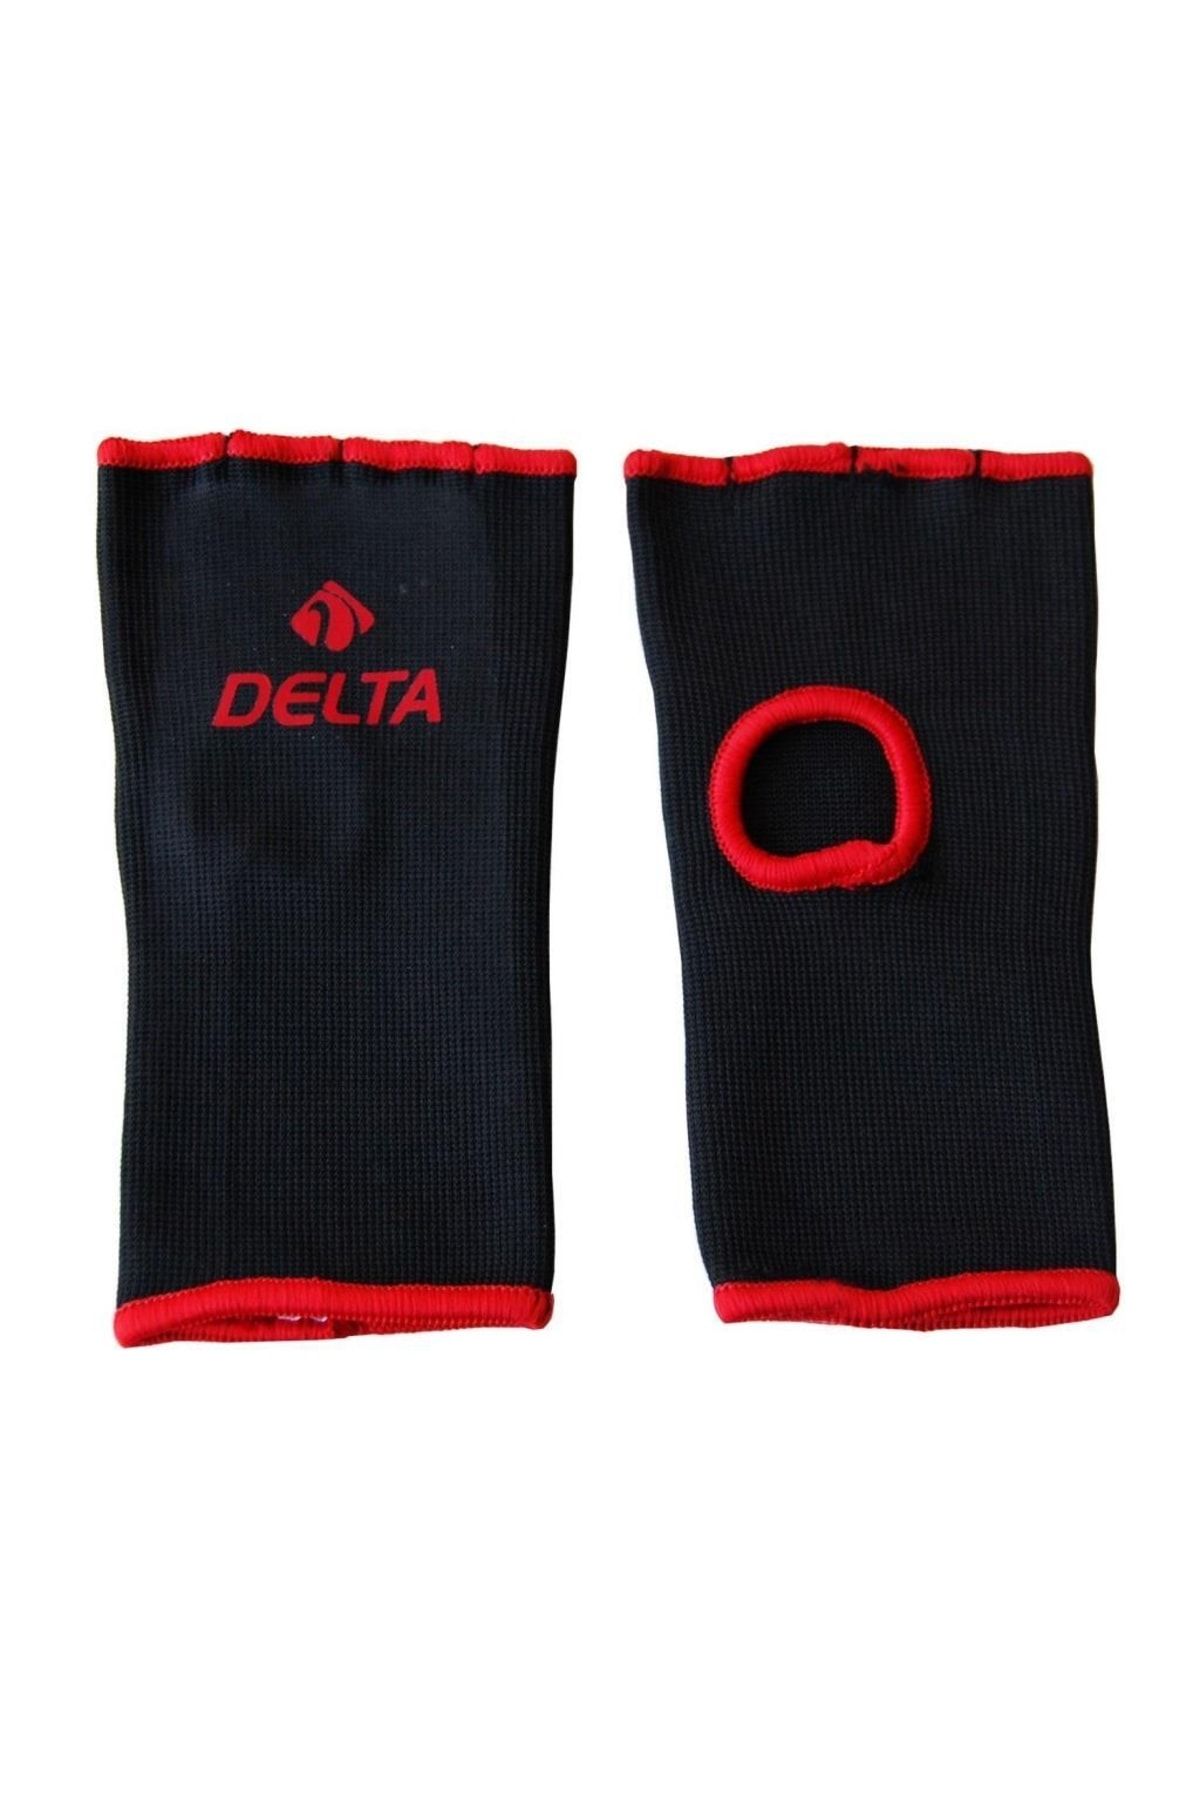 Delta Boks Eldiveni İçliği ( Boksör Bandı ) - Hand 5